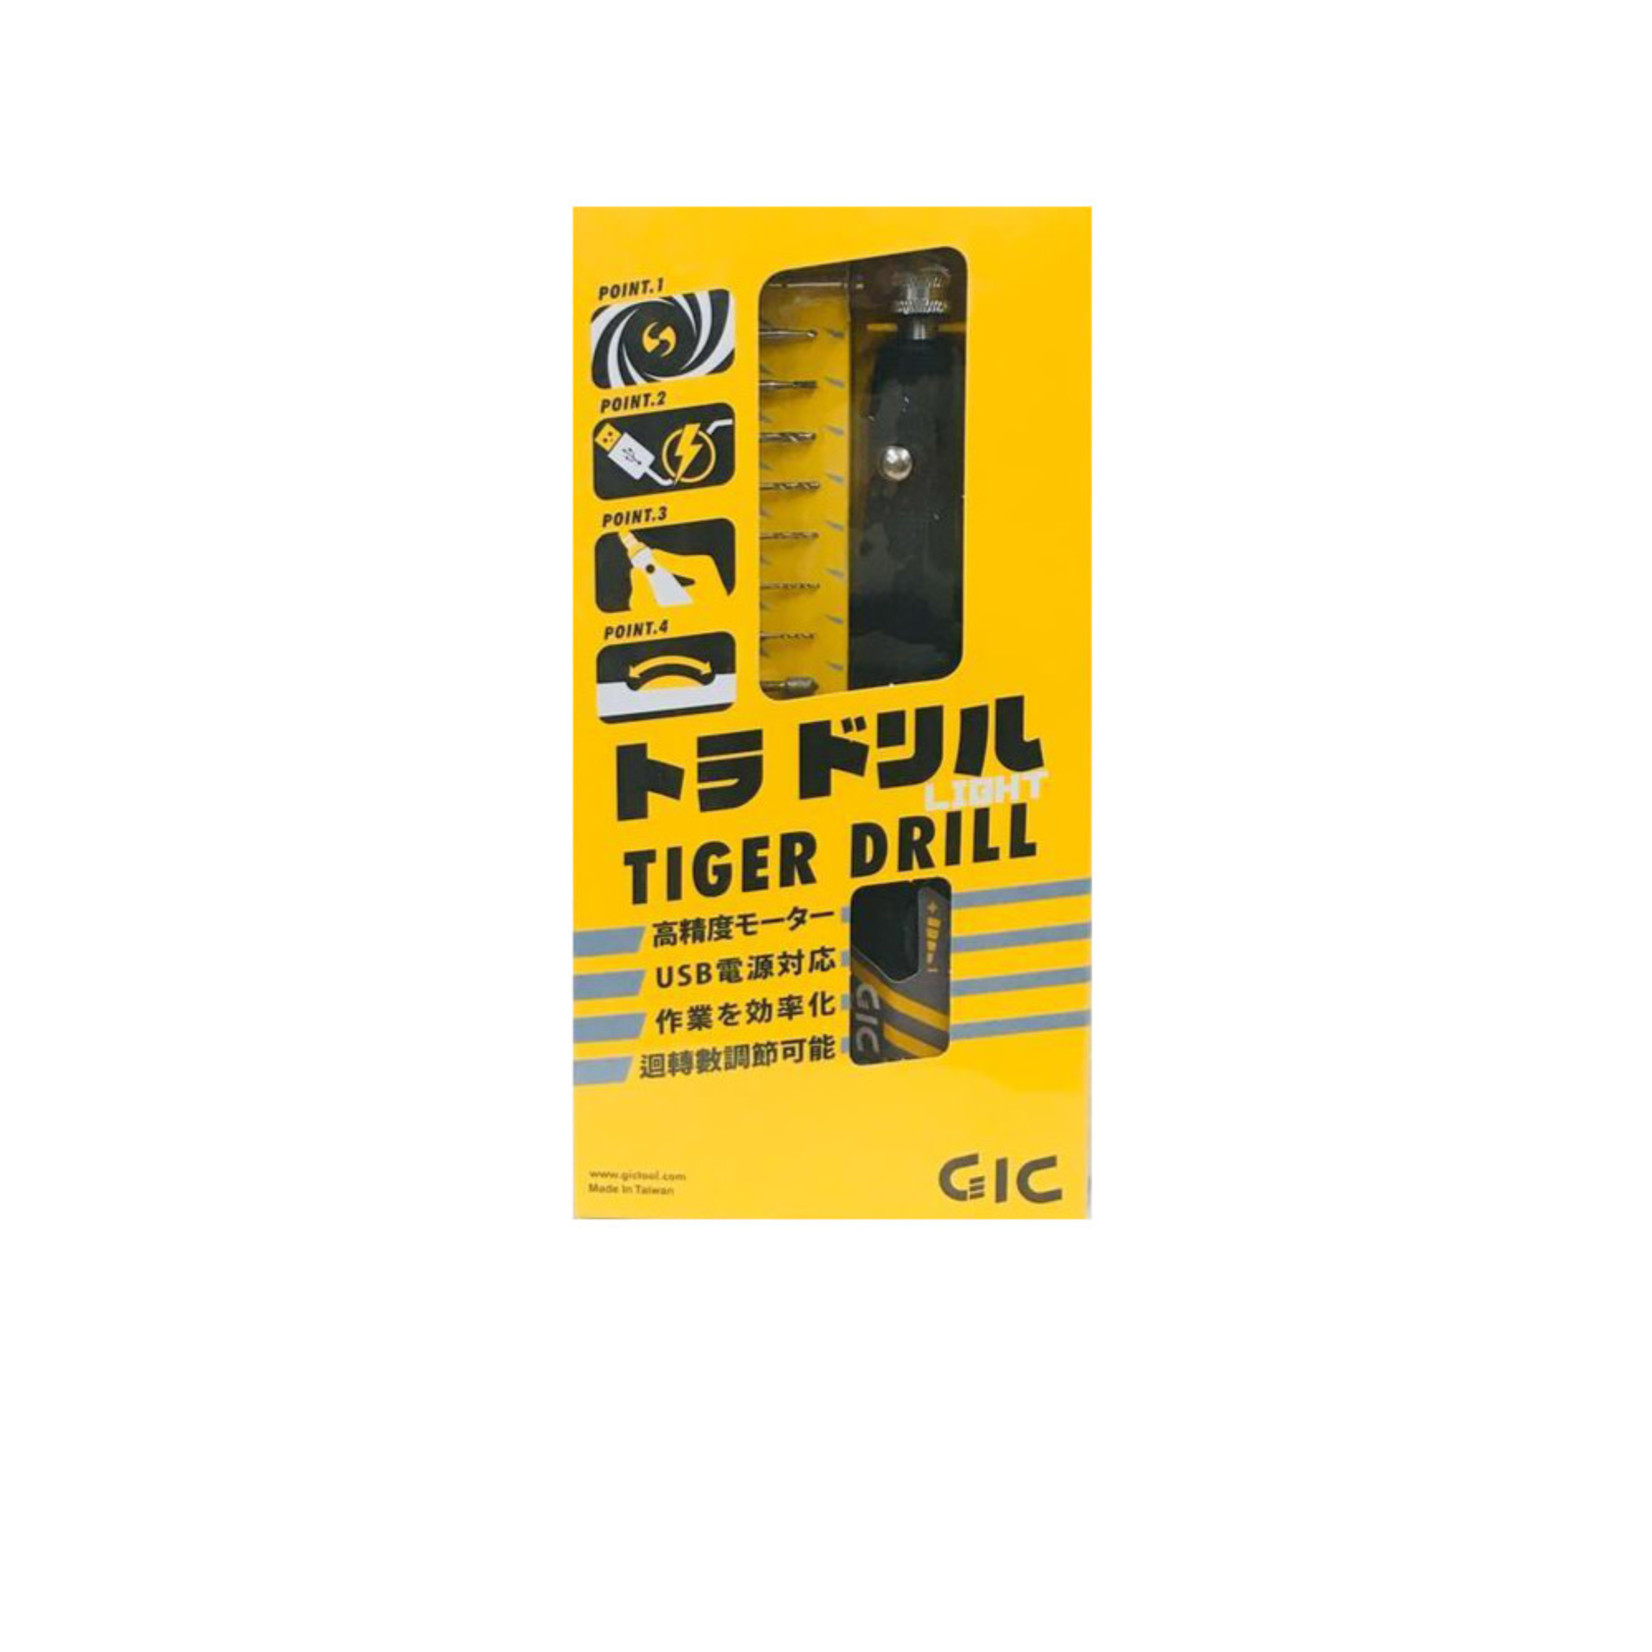 GIC GIC TD-01 TIGER DRILL USB POWER ELETRIC ENGRAVER WITH 12 DRILL BIT SET